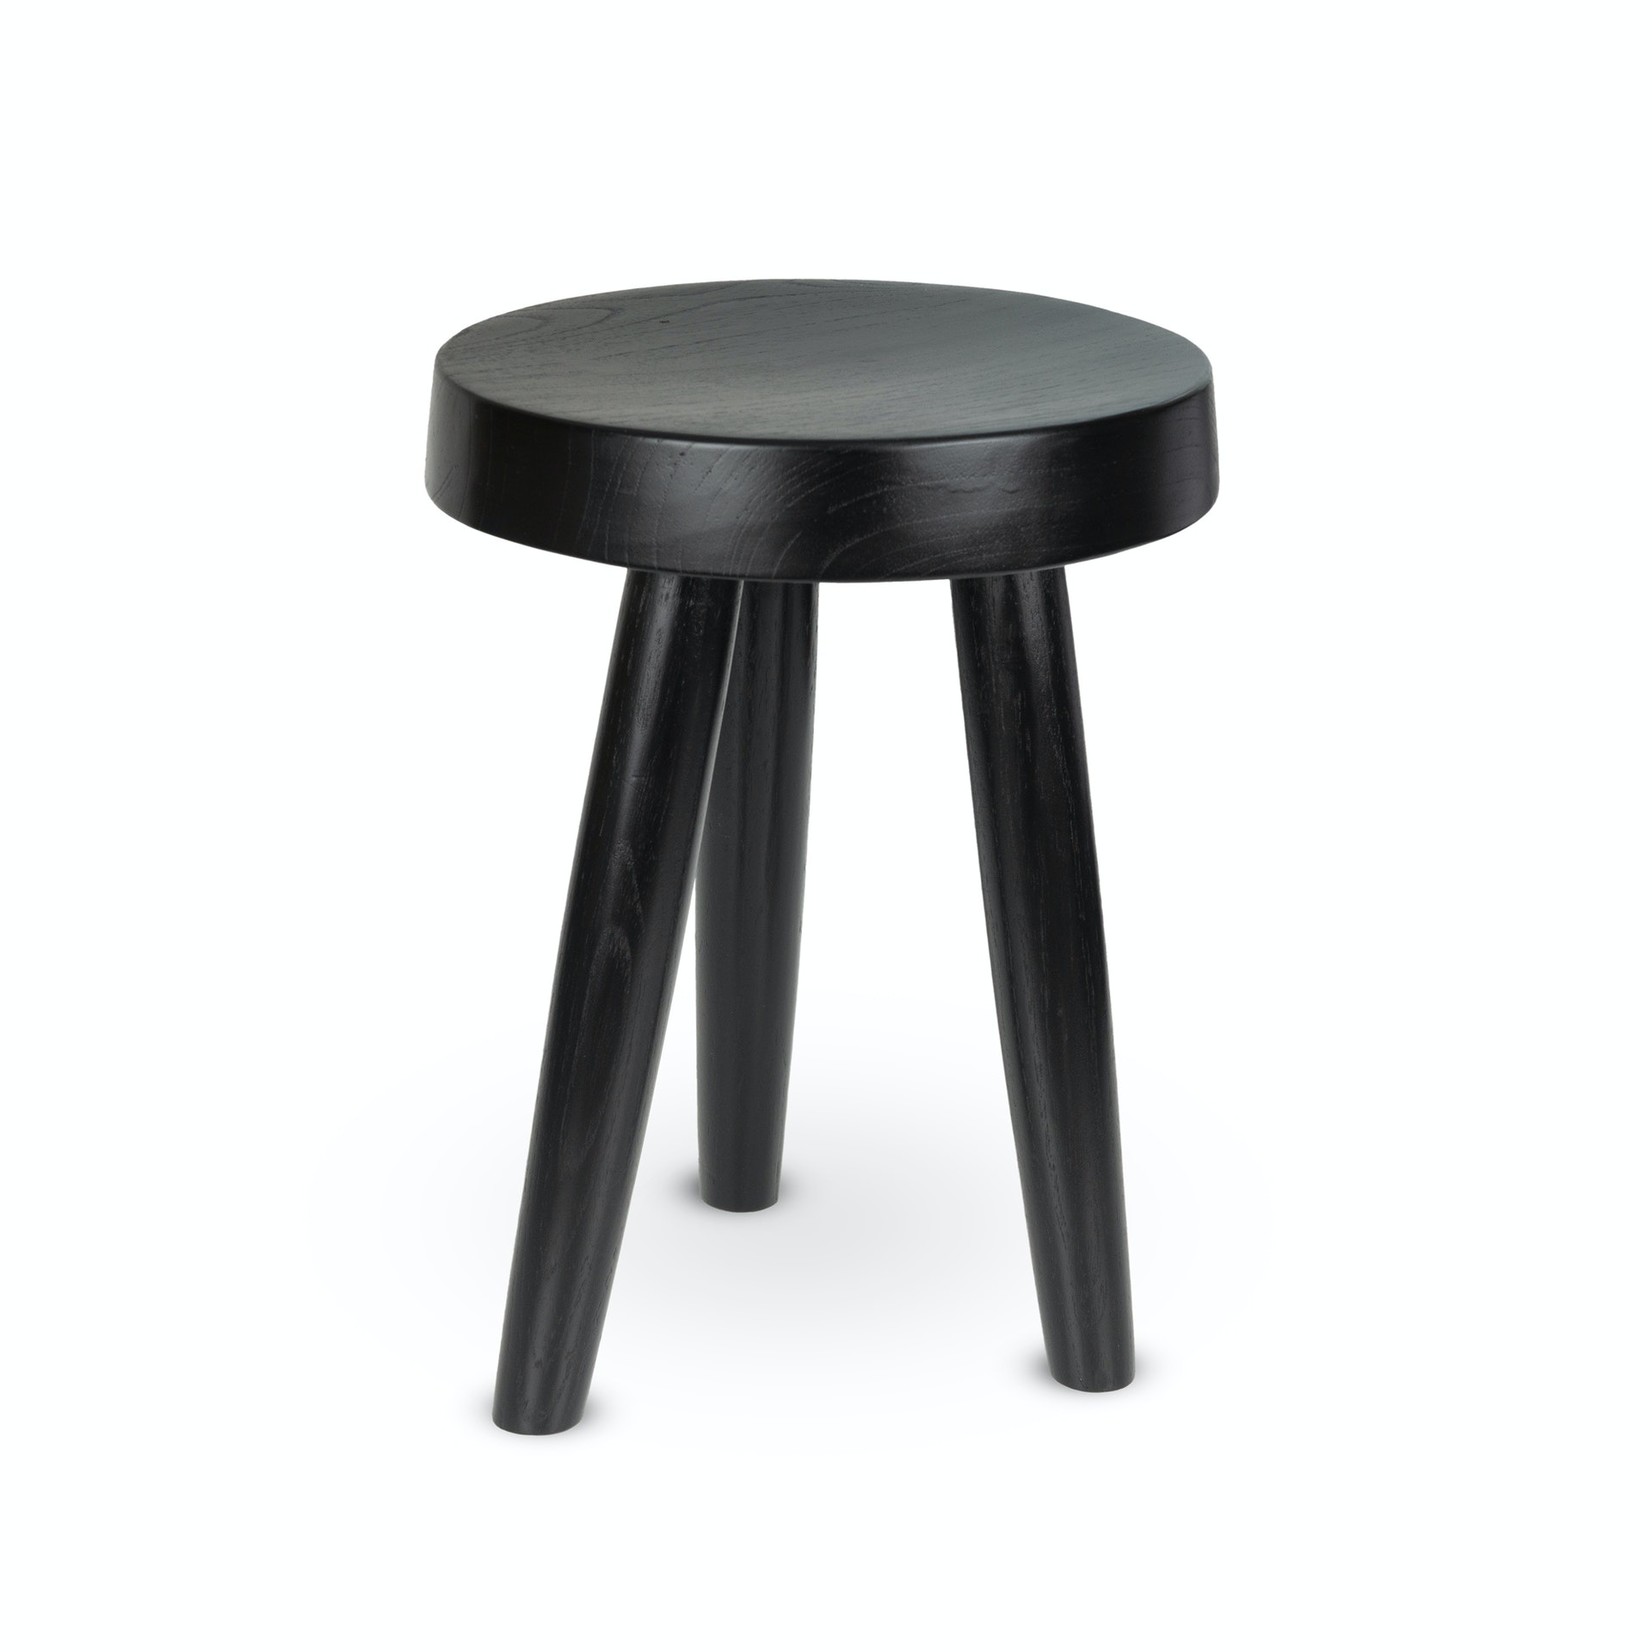 DETJER Chandigarh style wooden stool - Charcoal black